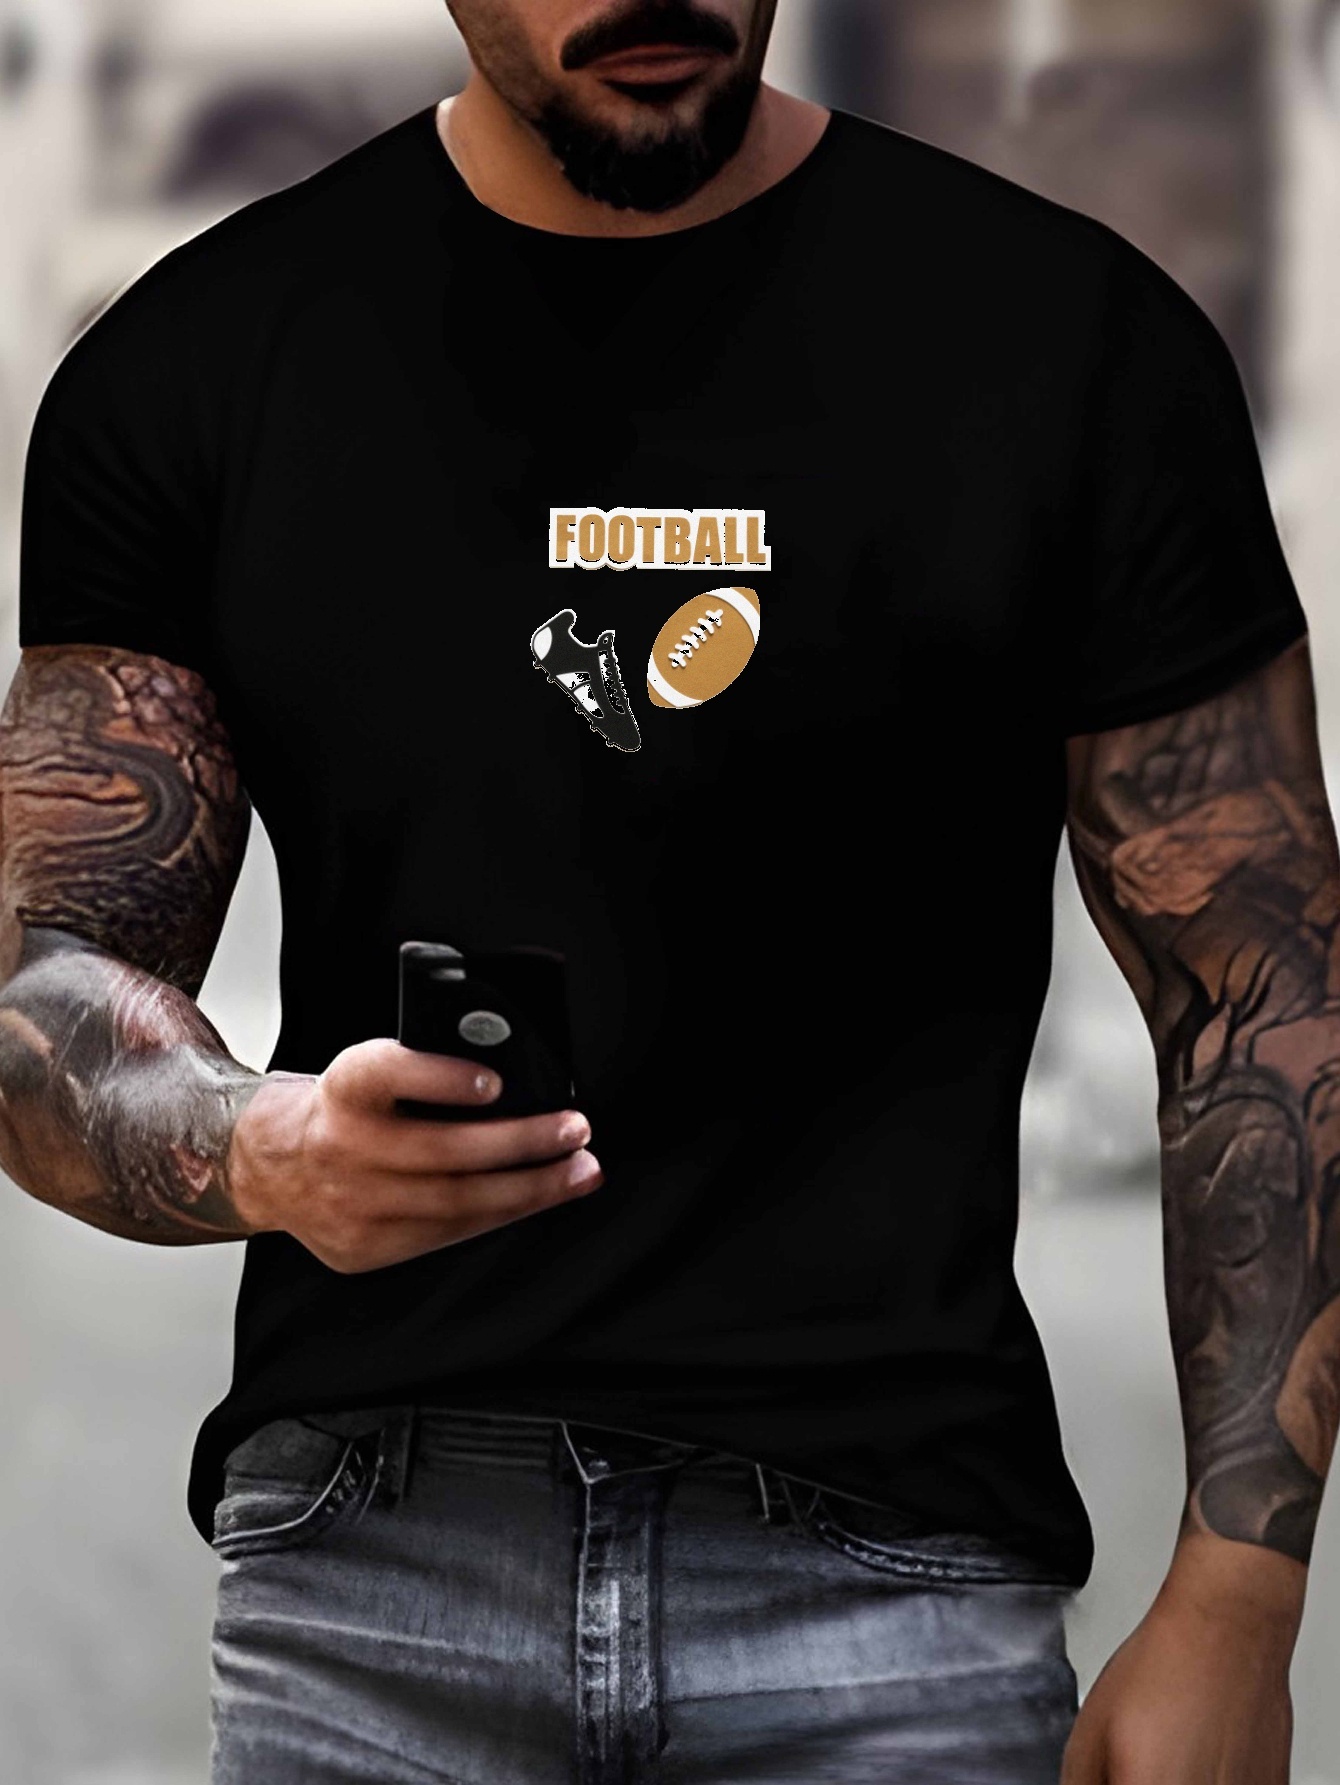 NFL Oversized T-Shirts for Men